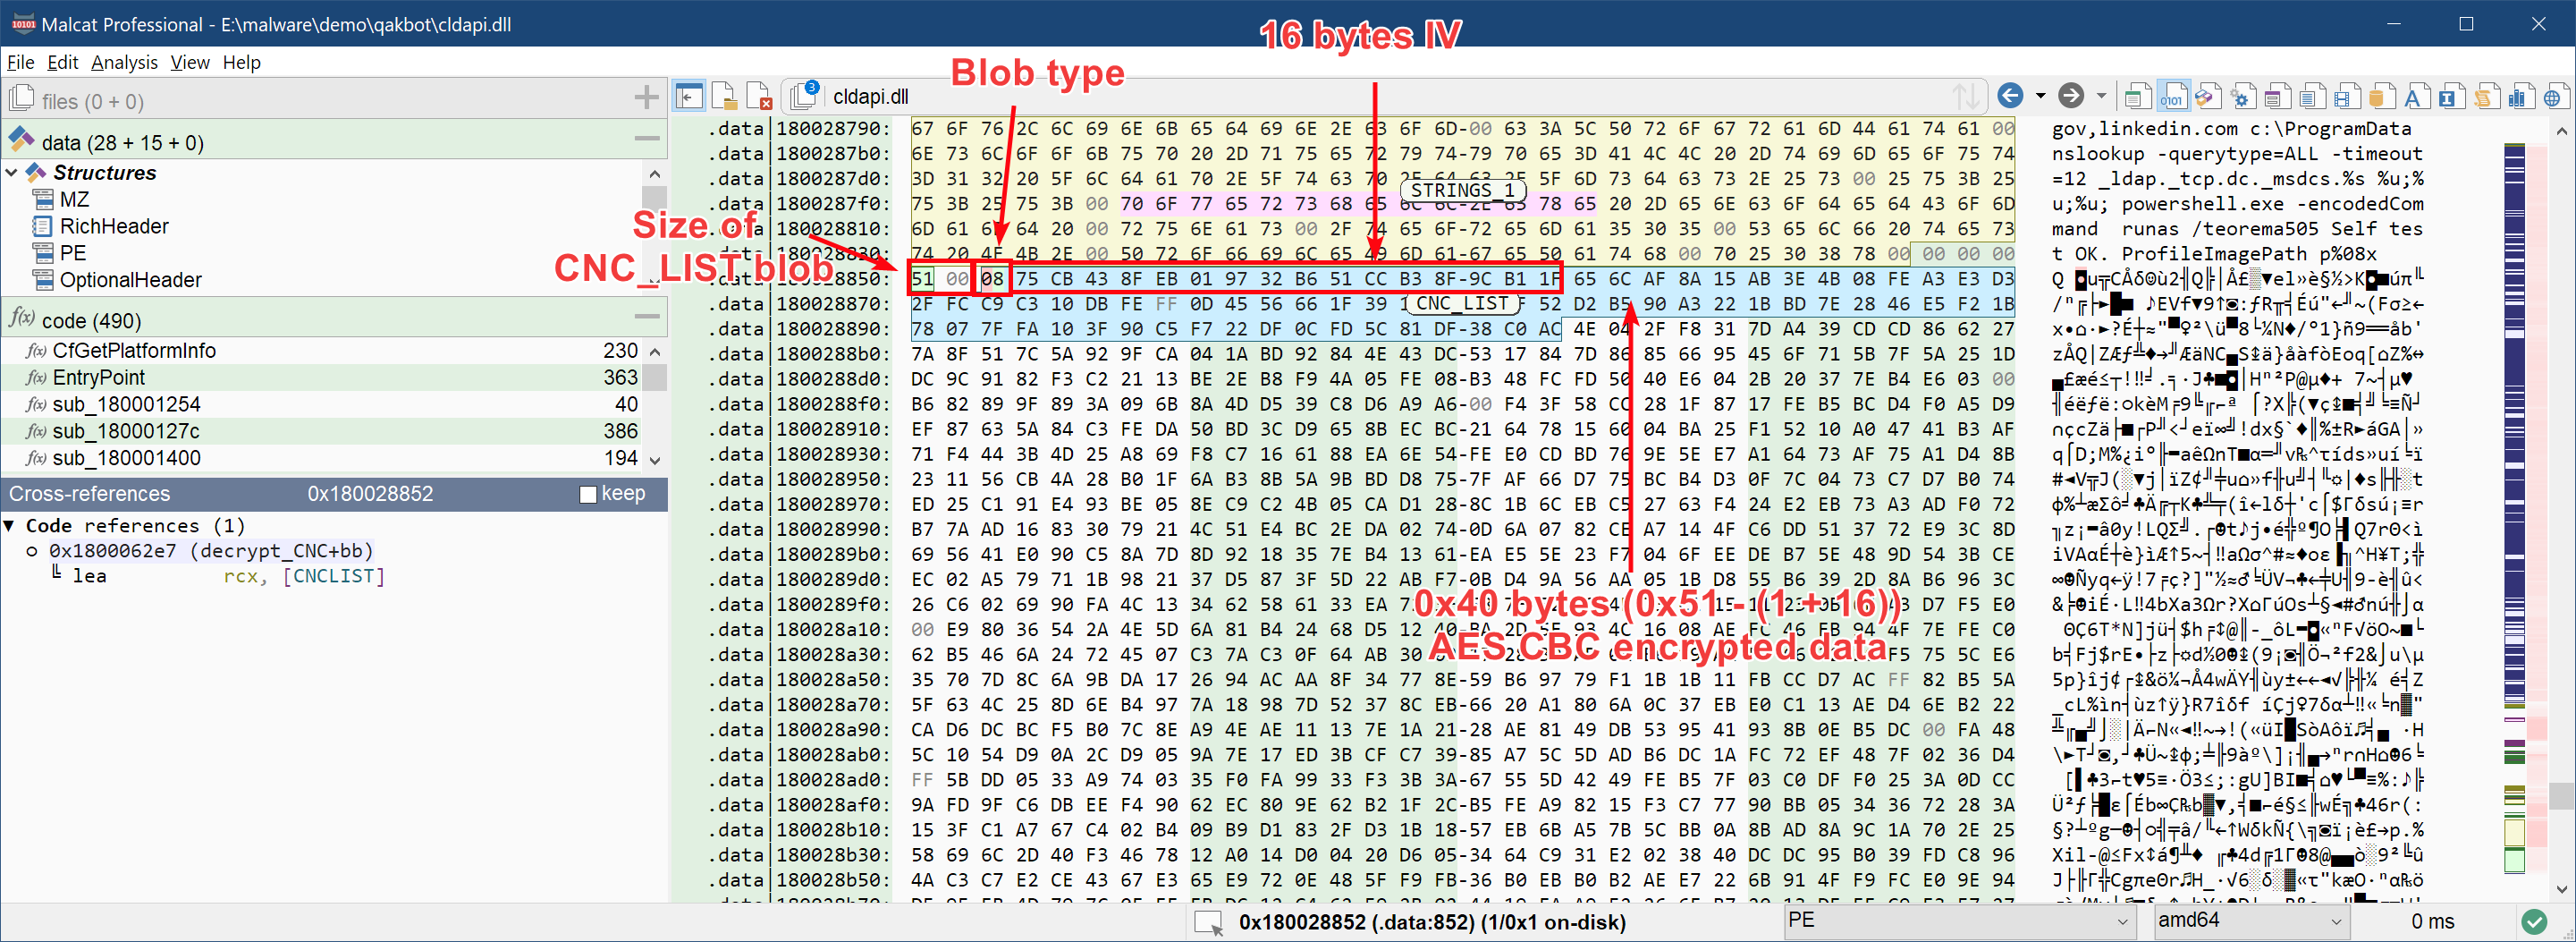 Cnc list encrypted blob